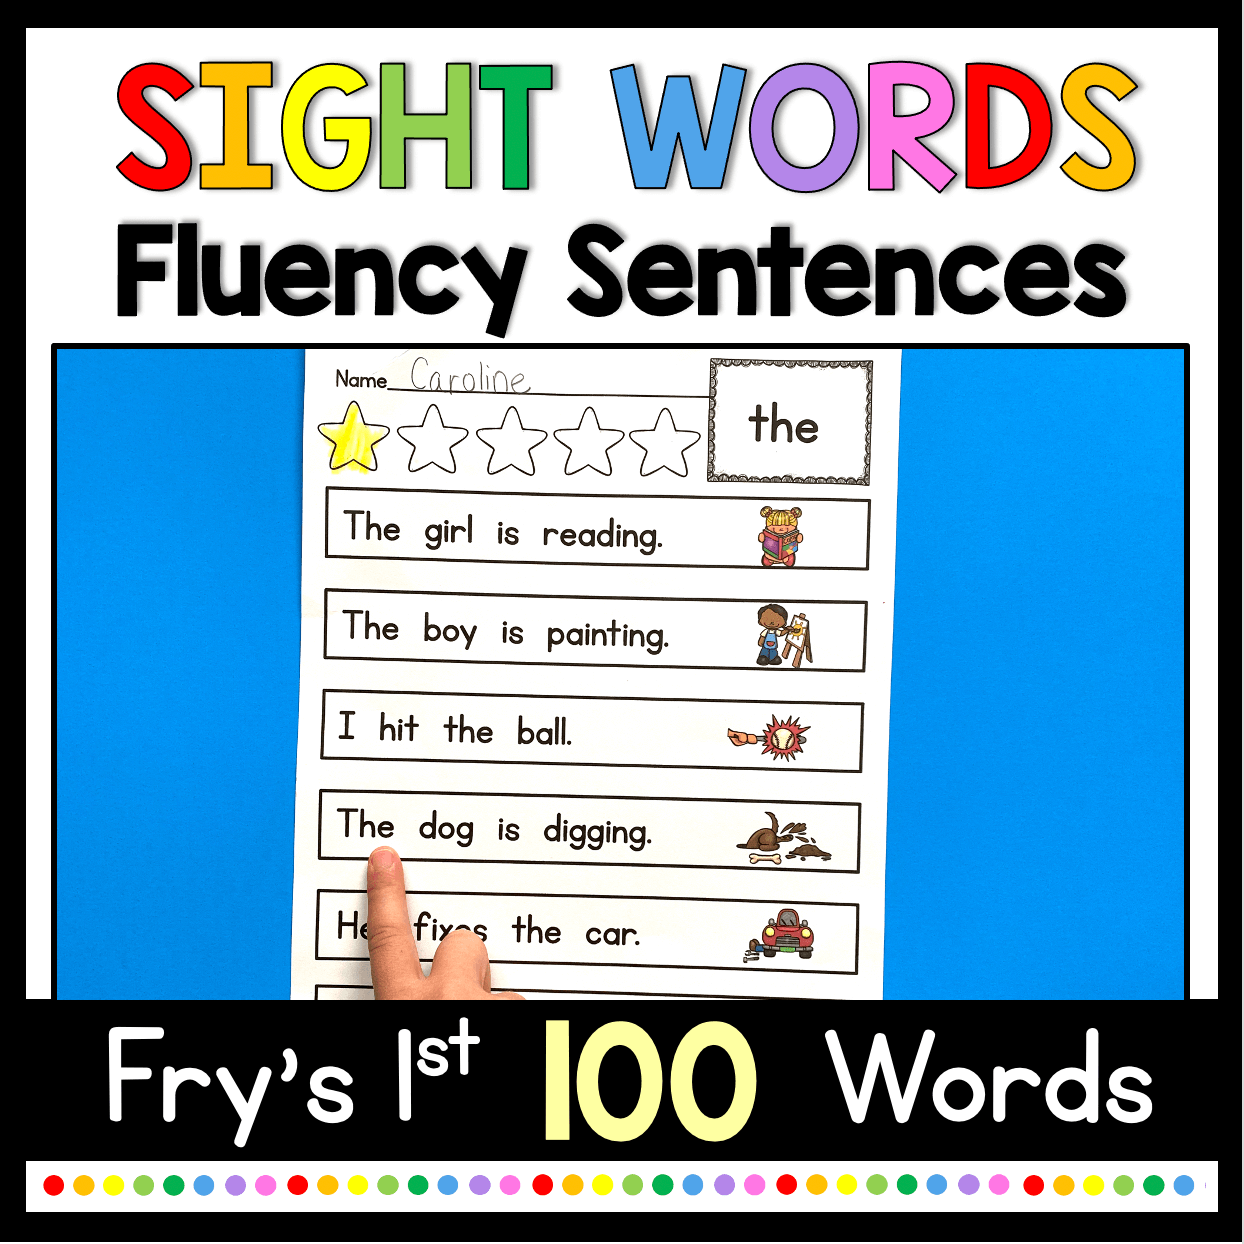 Fluency Sentences